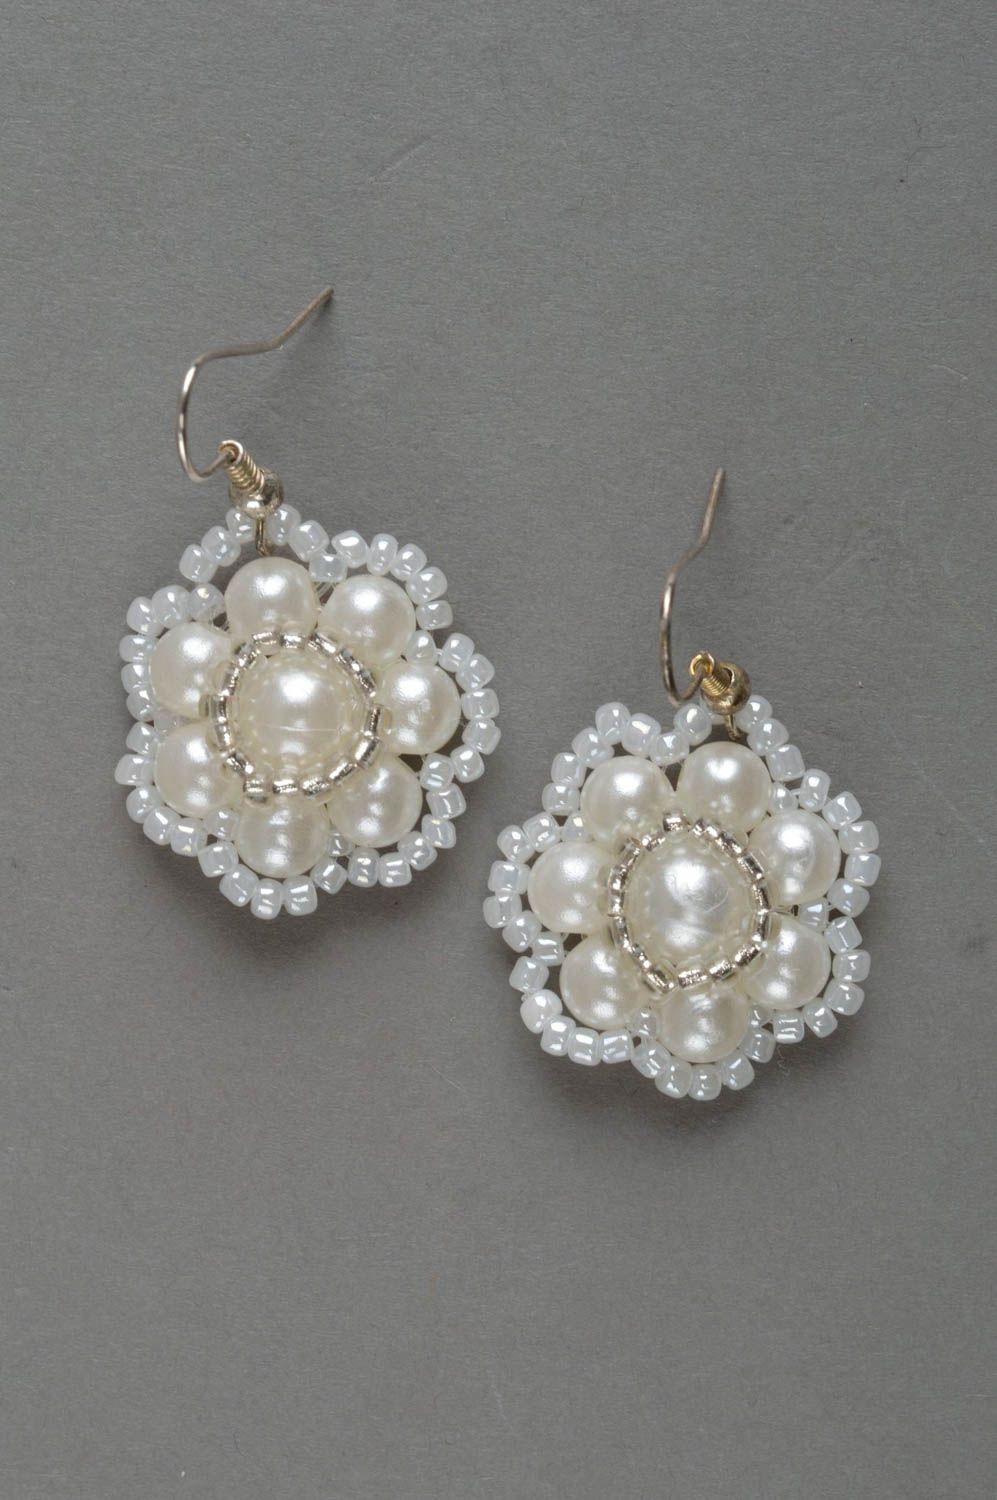 Handmade beaded flower earrings designer jewelry unusual gifts for her photo 2